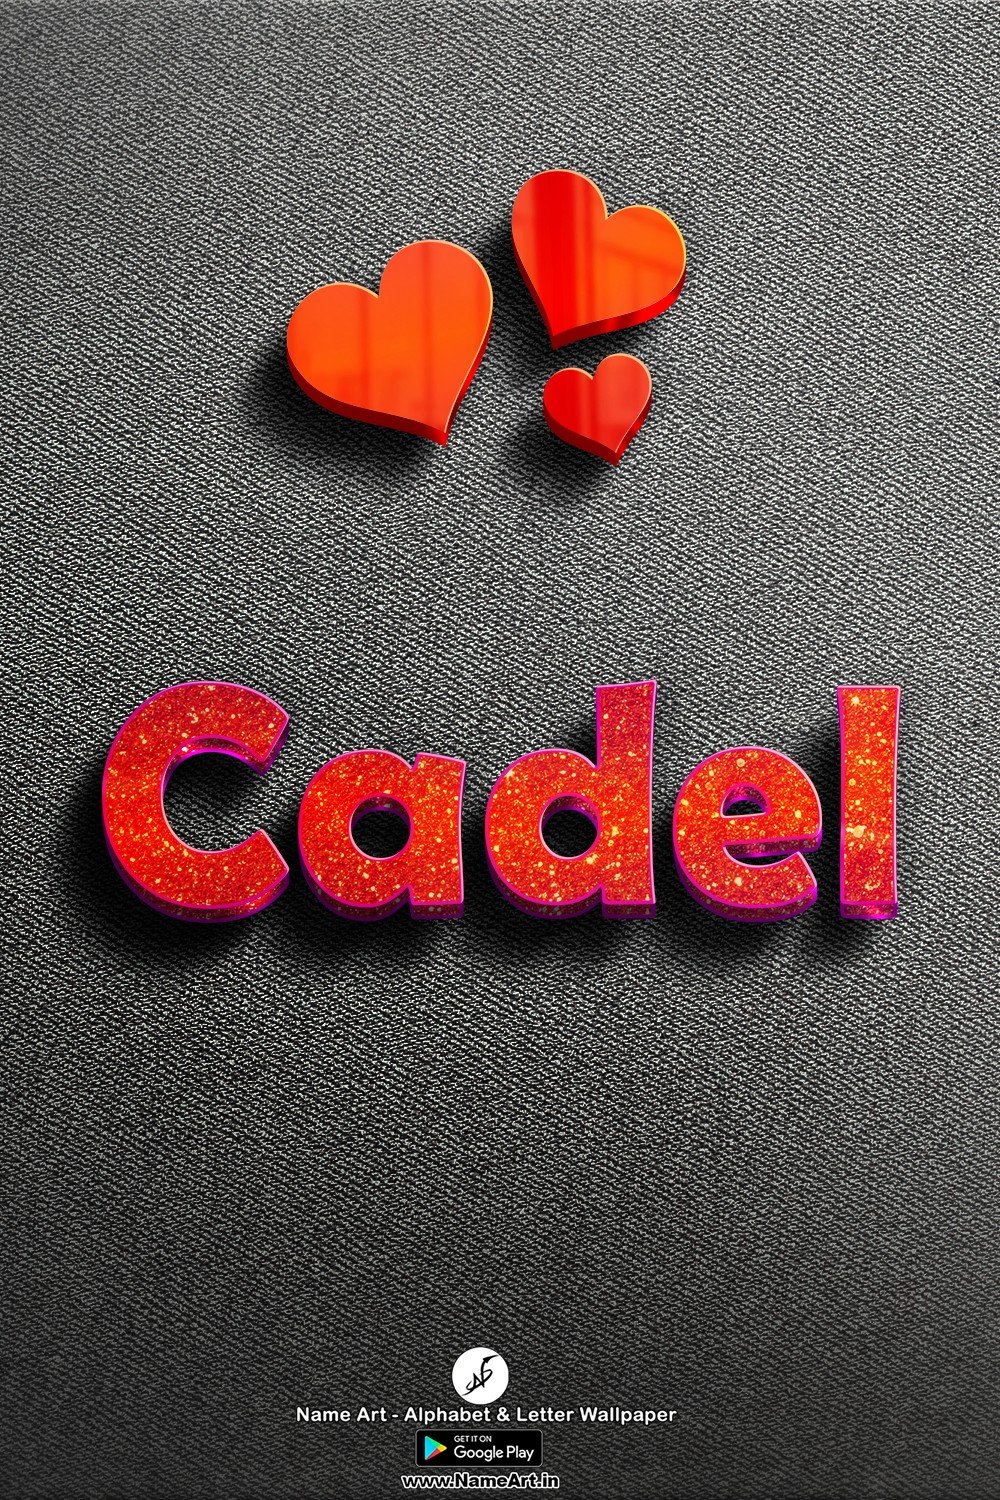 Cadel | Whatsapp Status Cadel | Happy Birthday Cadel !! | New Whatsapp Status Cadel Images |